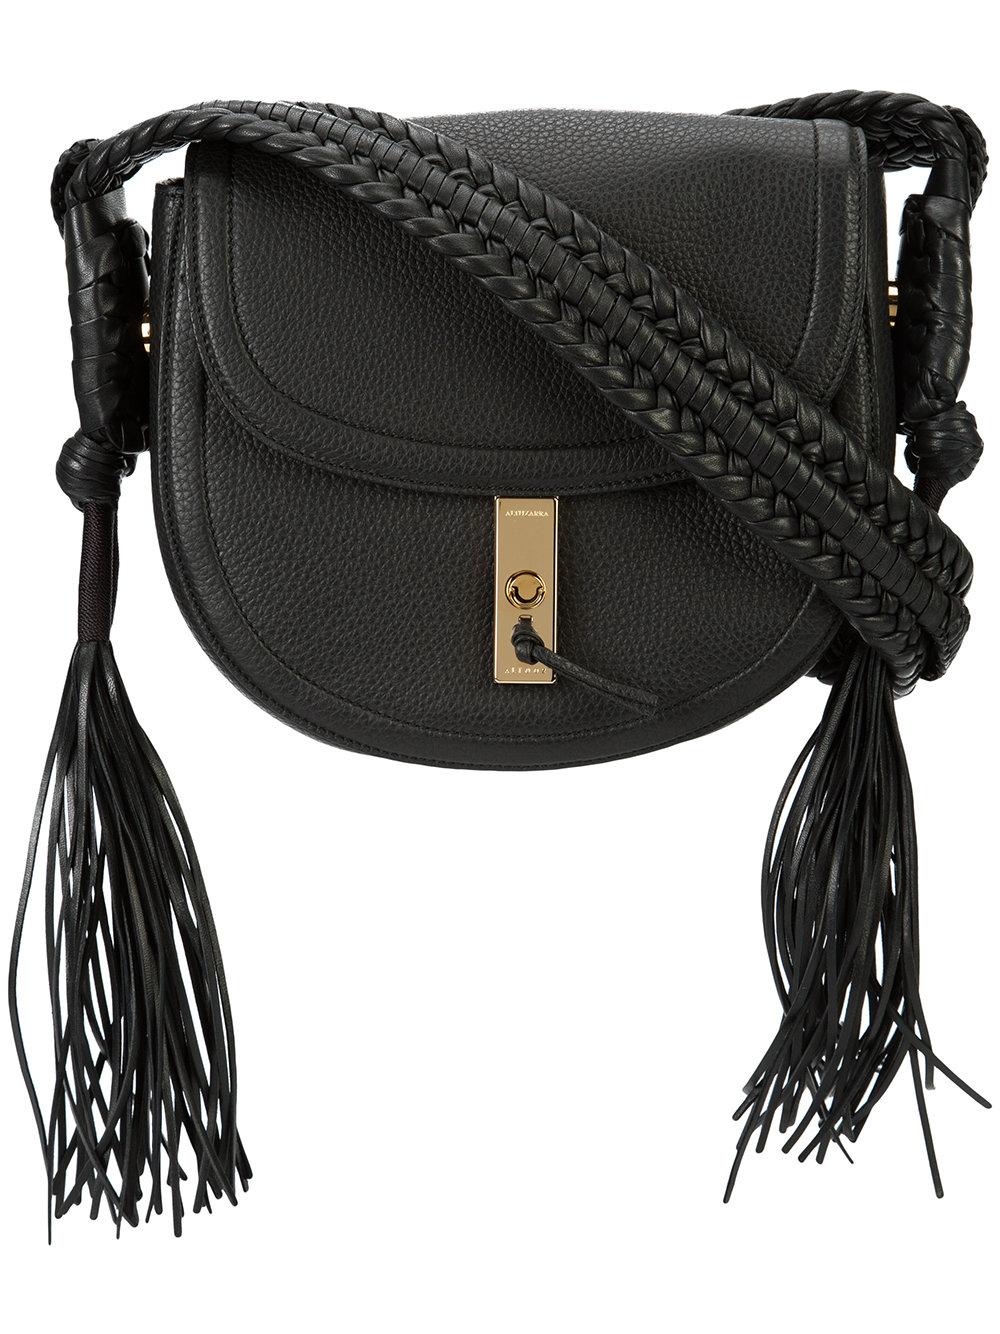 Altuzarra Ghianda Bullrope Saddle Leather Shoulder Bag in Black - Lyst